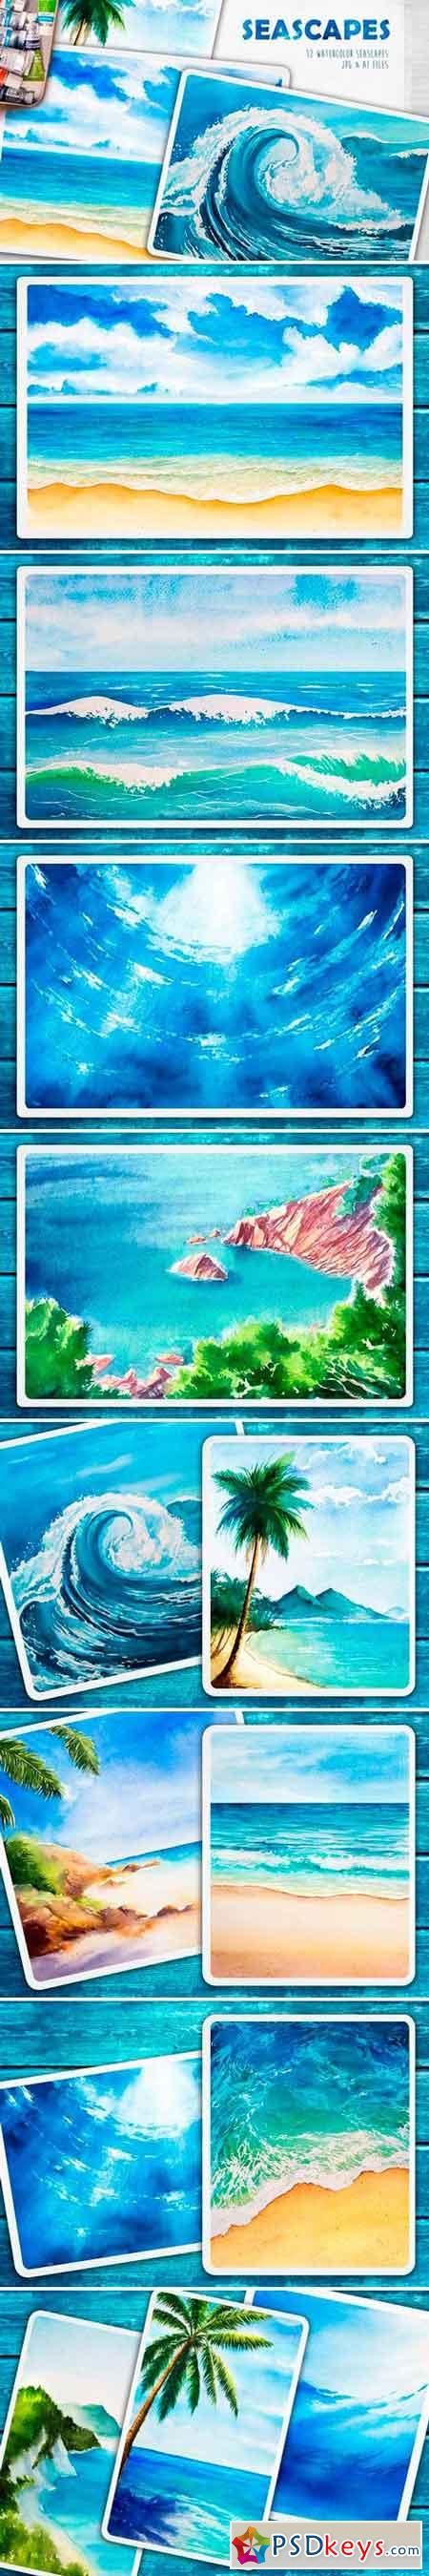 Seascapes Watercolor illustrations 1432806